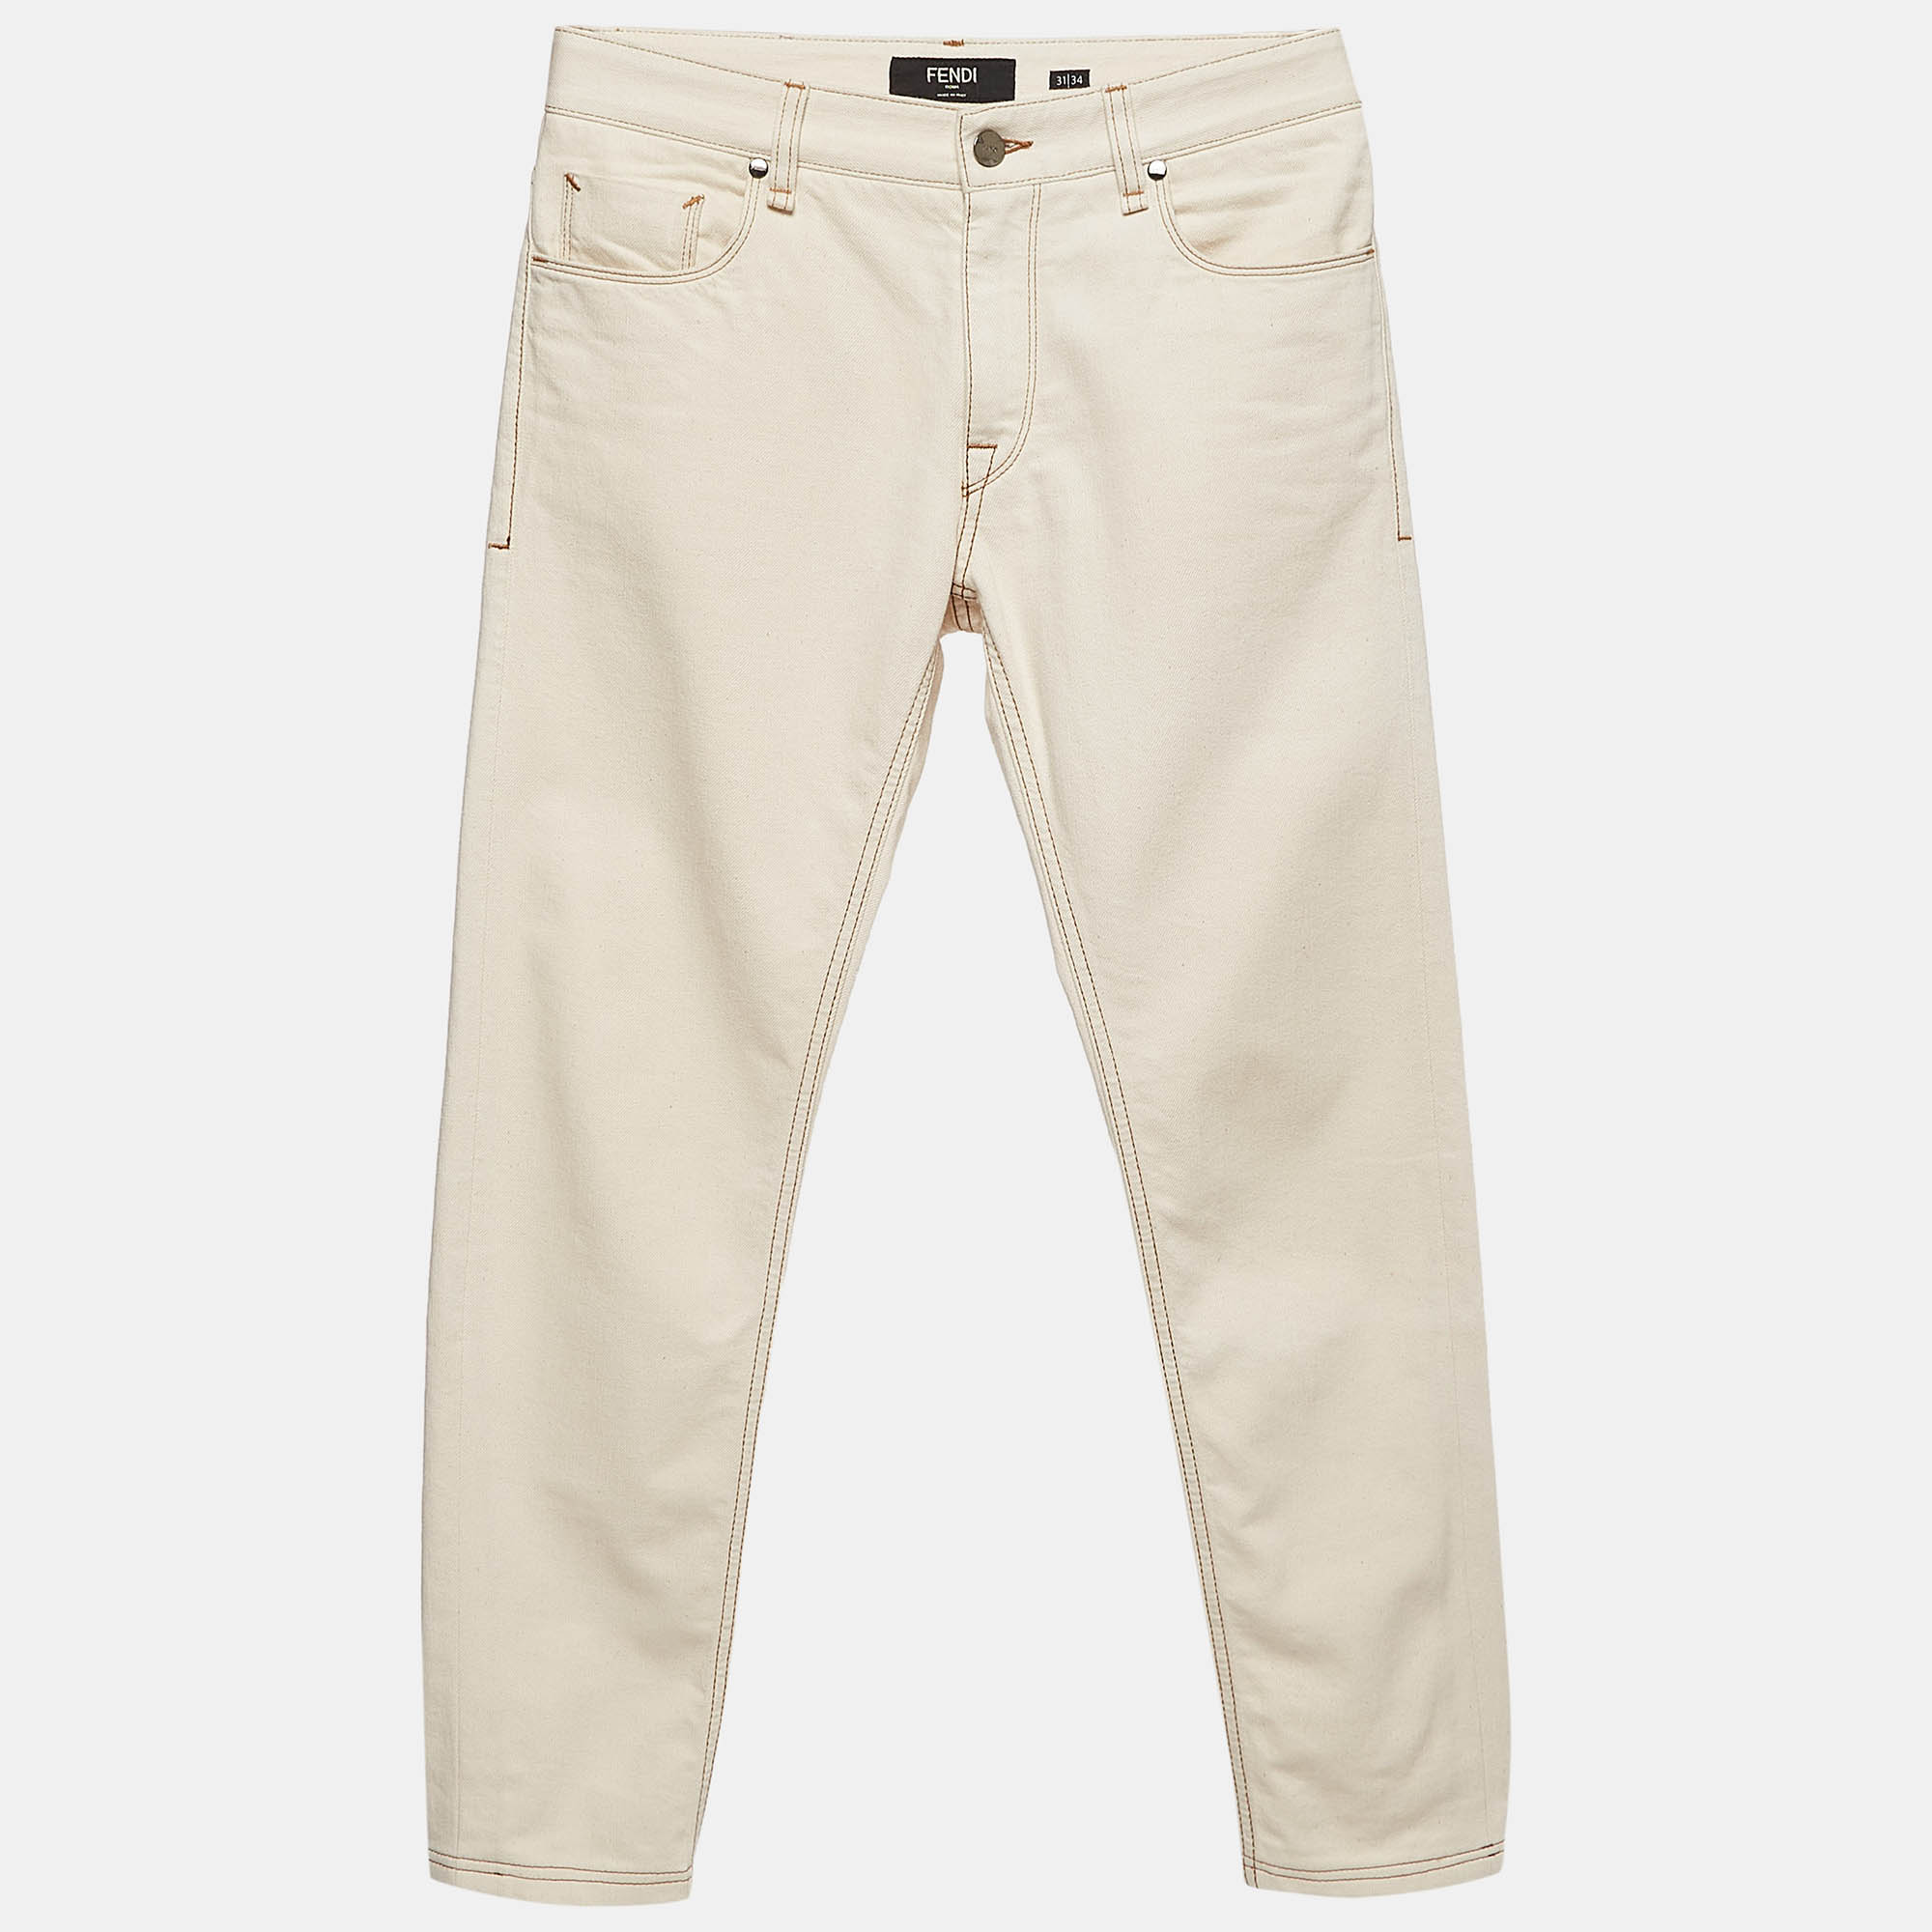 Fendi cream denim skinny jeans m waist 31"